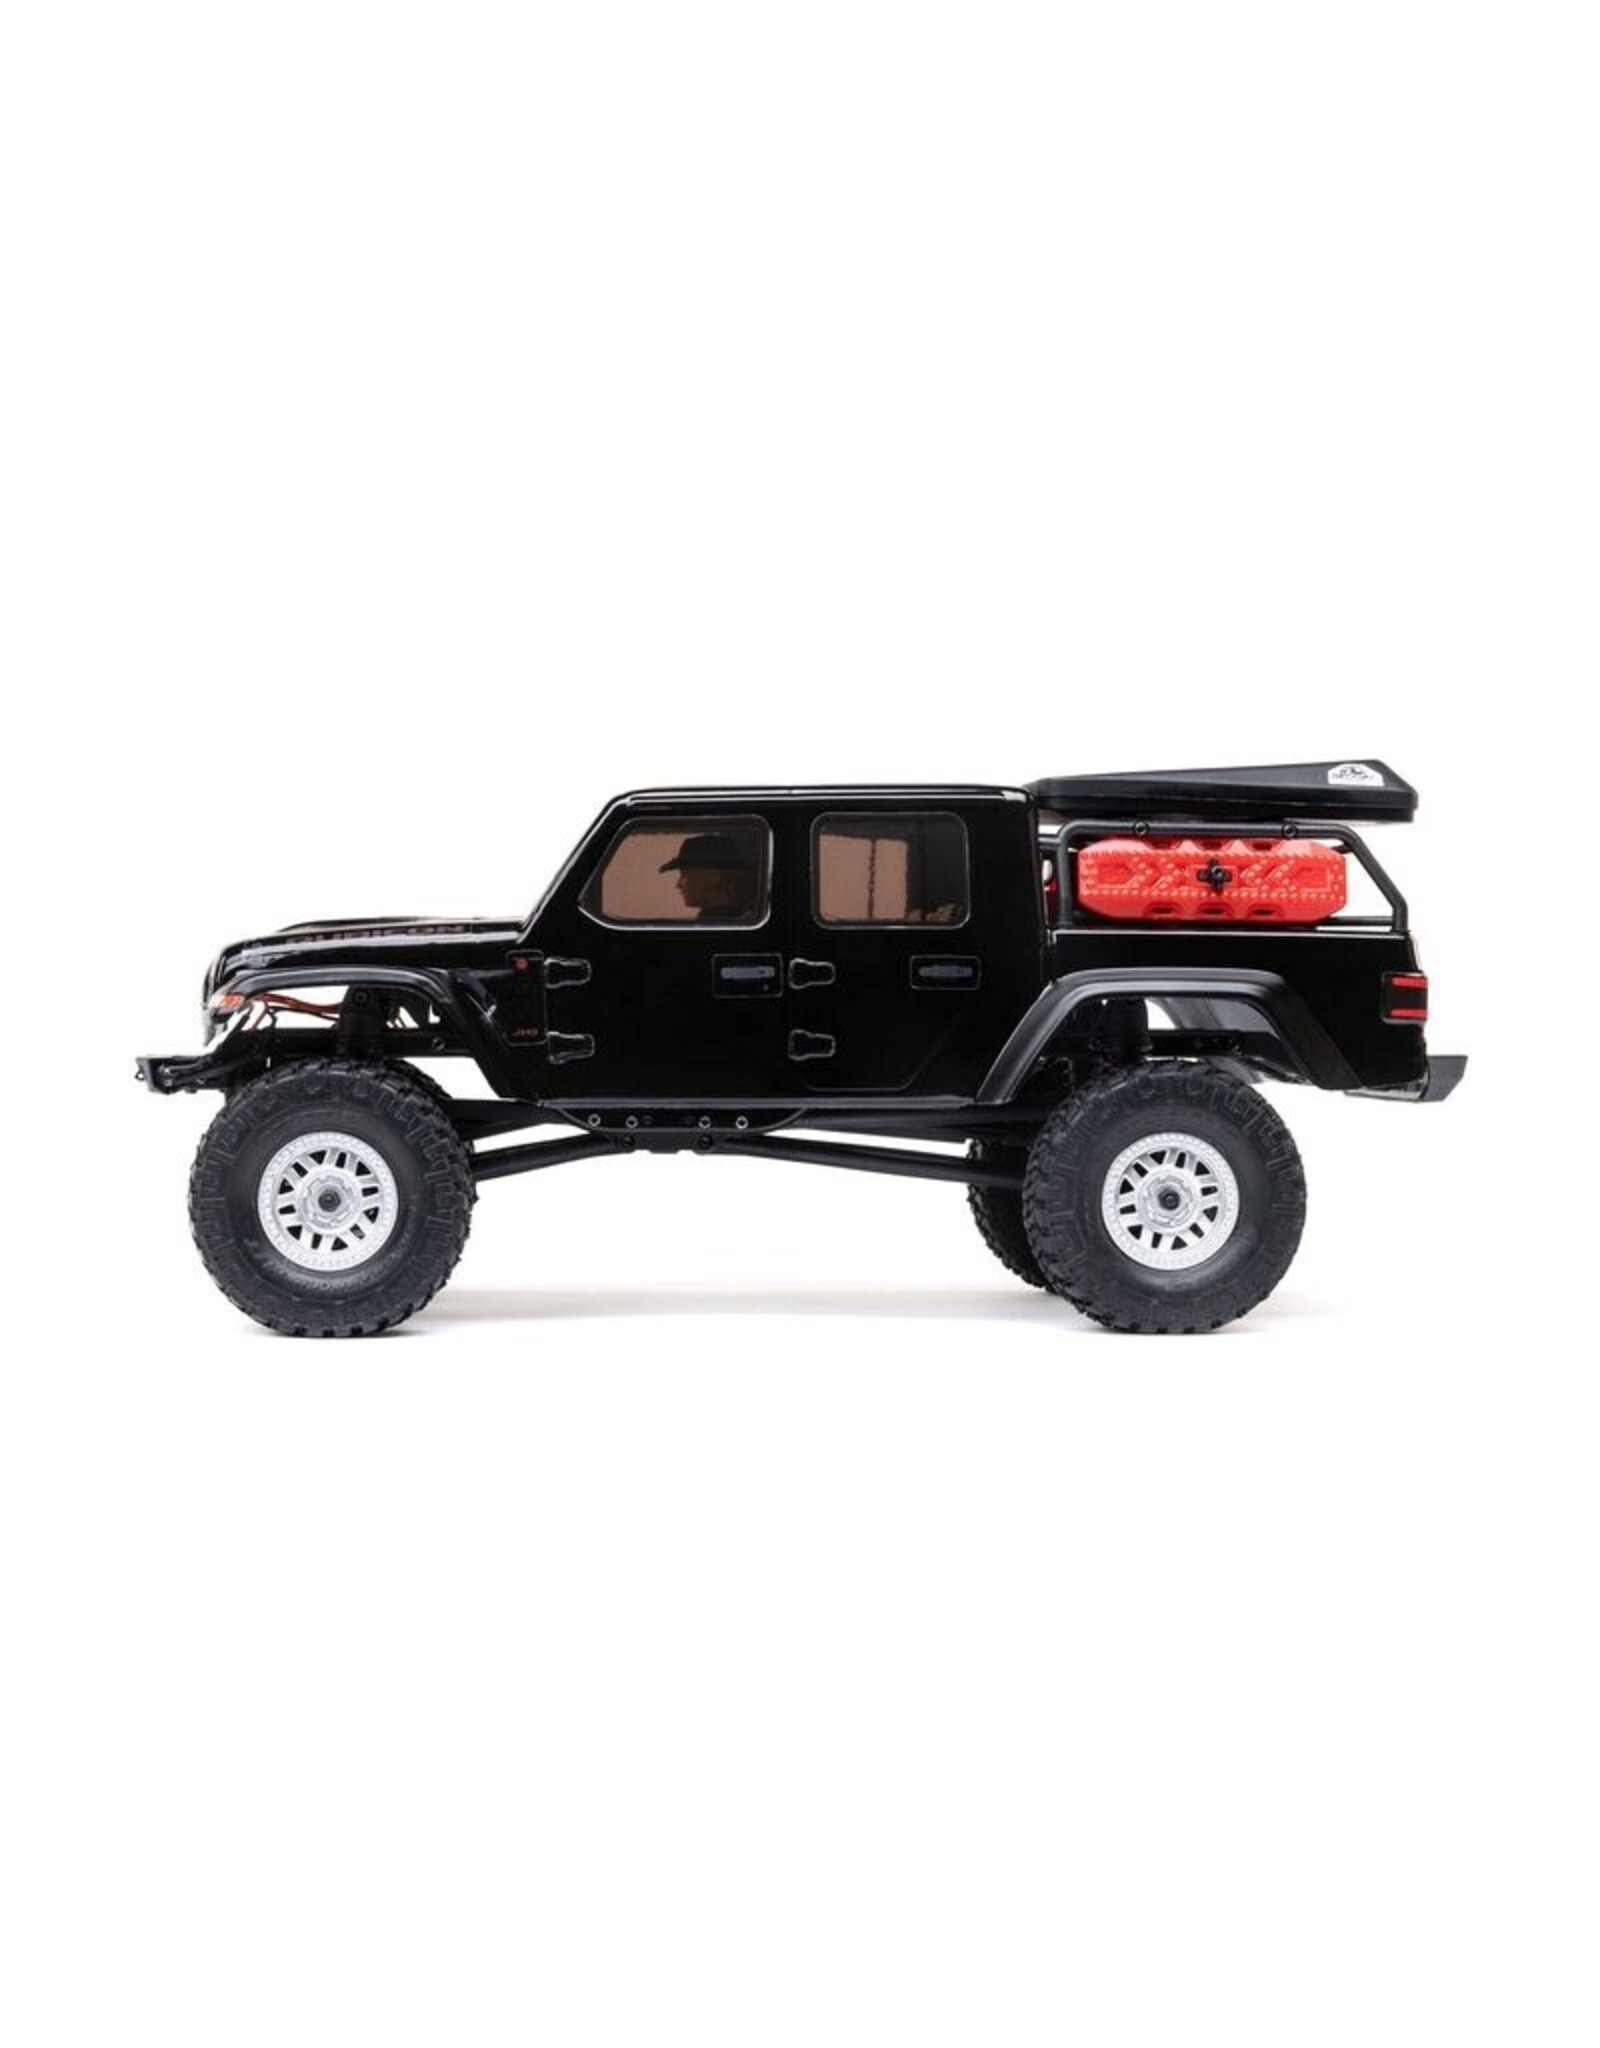 Axial AXI00005V2T5 SCX24 Jeep Gladiator 4WD Rock Crawler RTR, Black